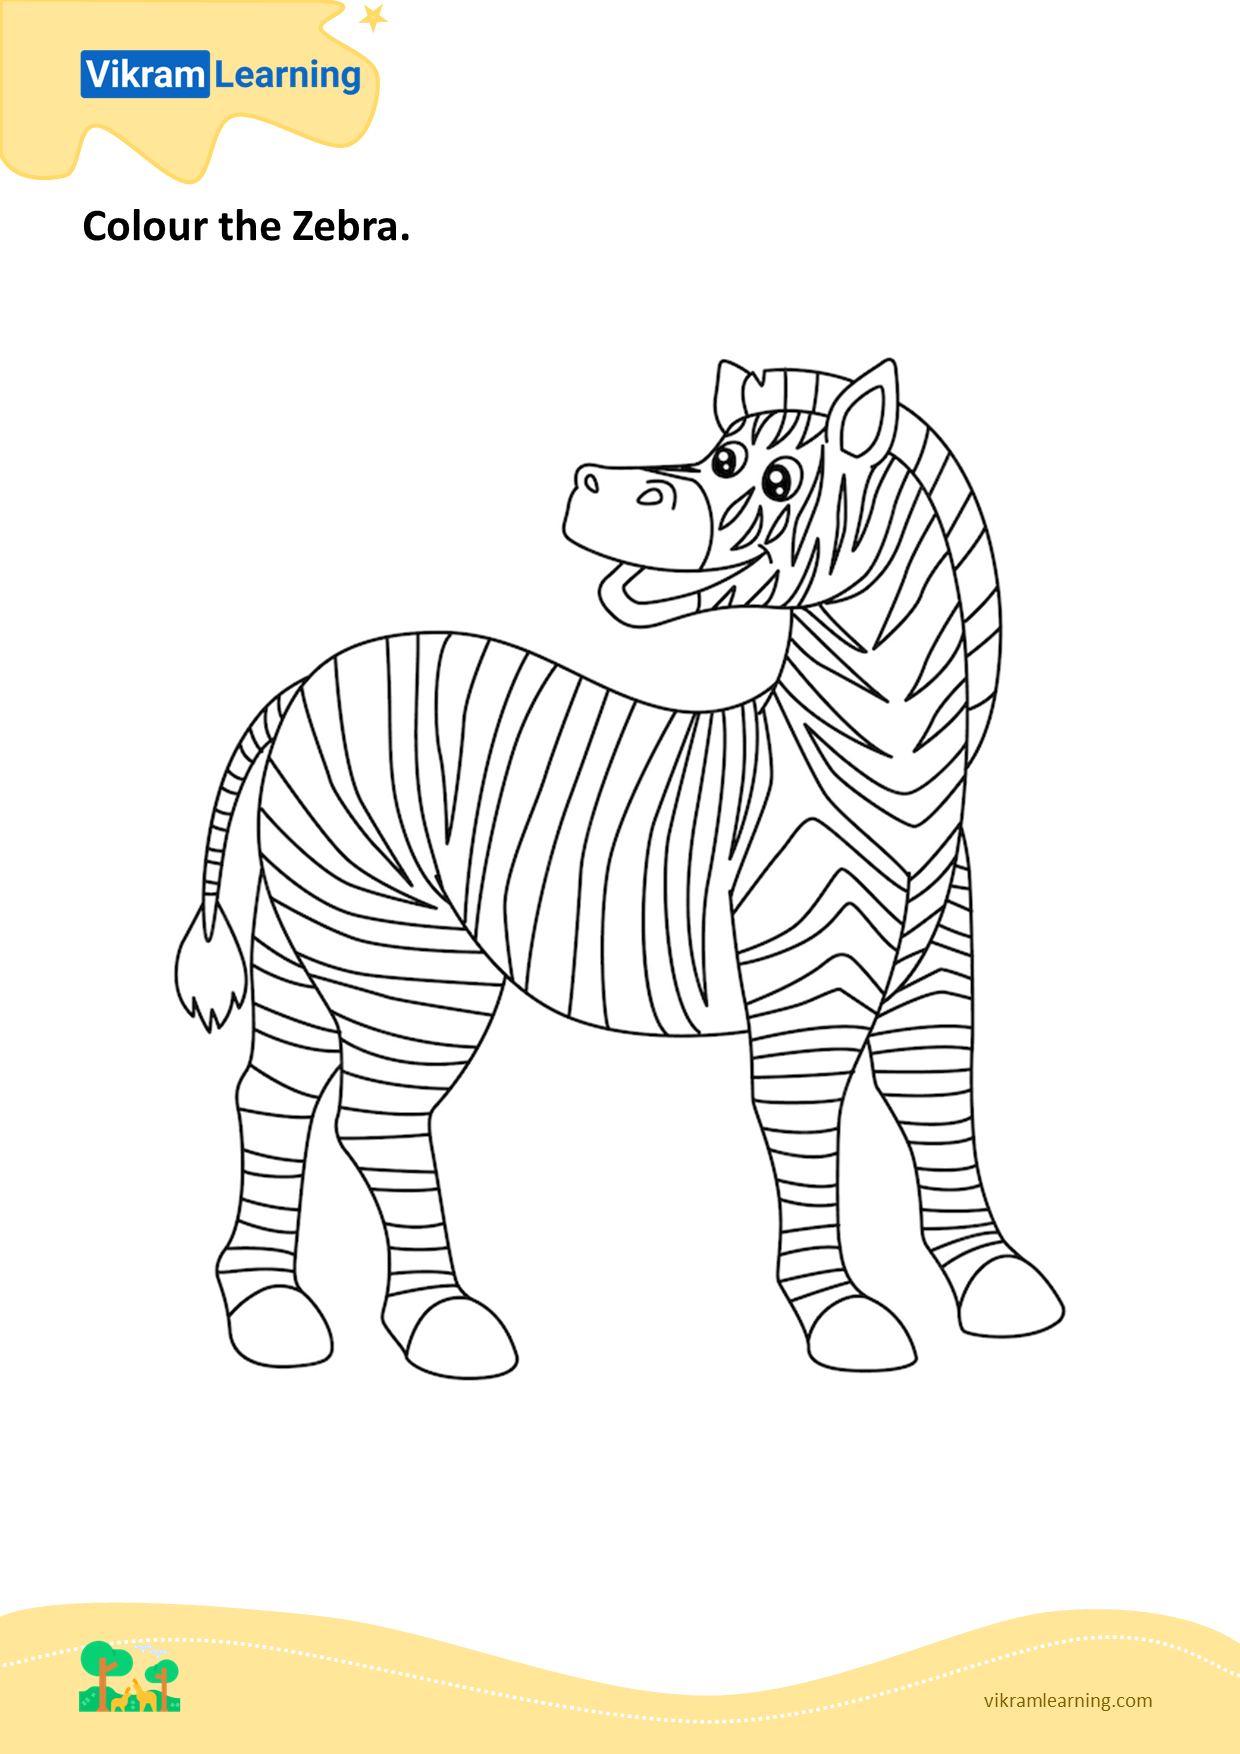 Download colour the zebra worksheets